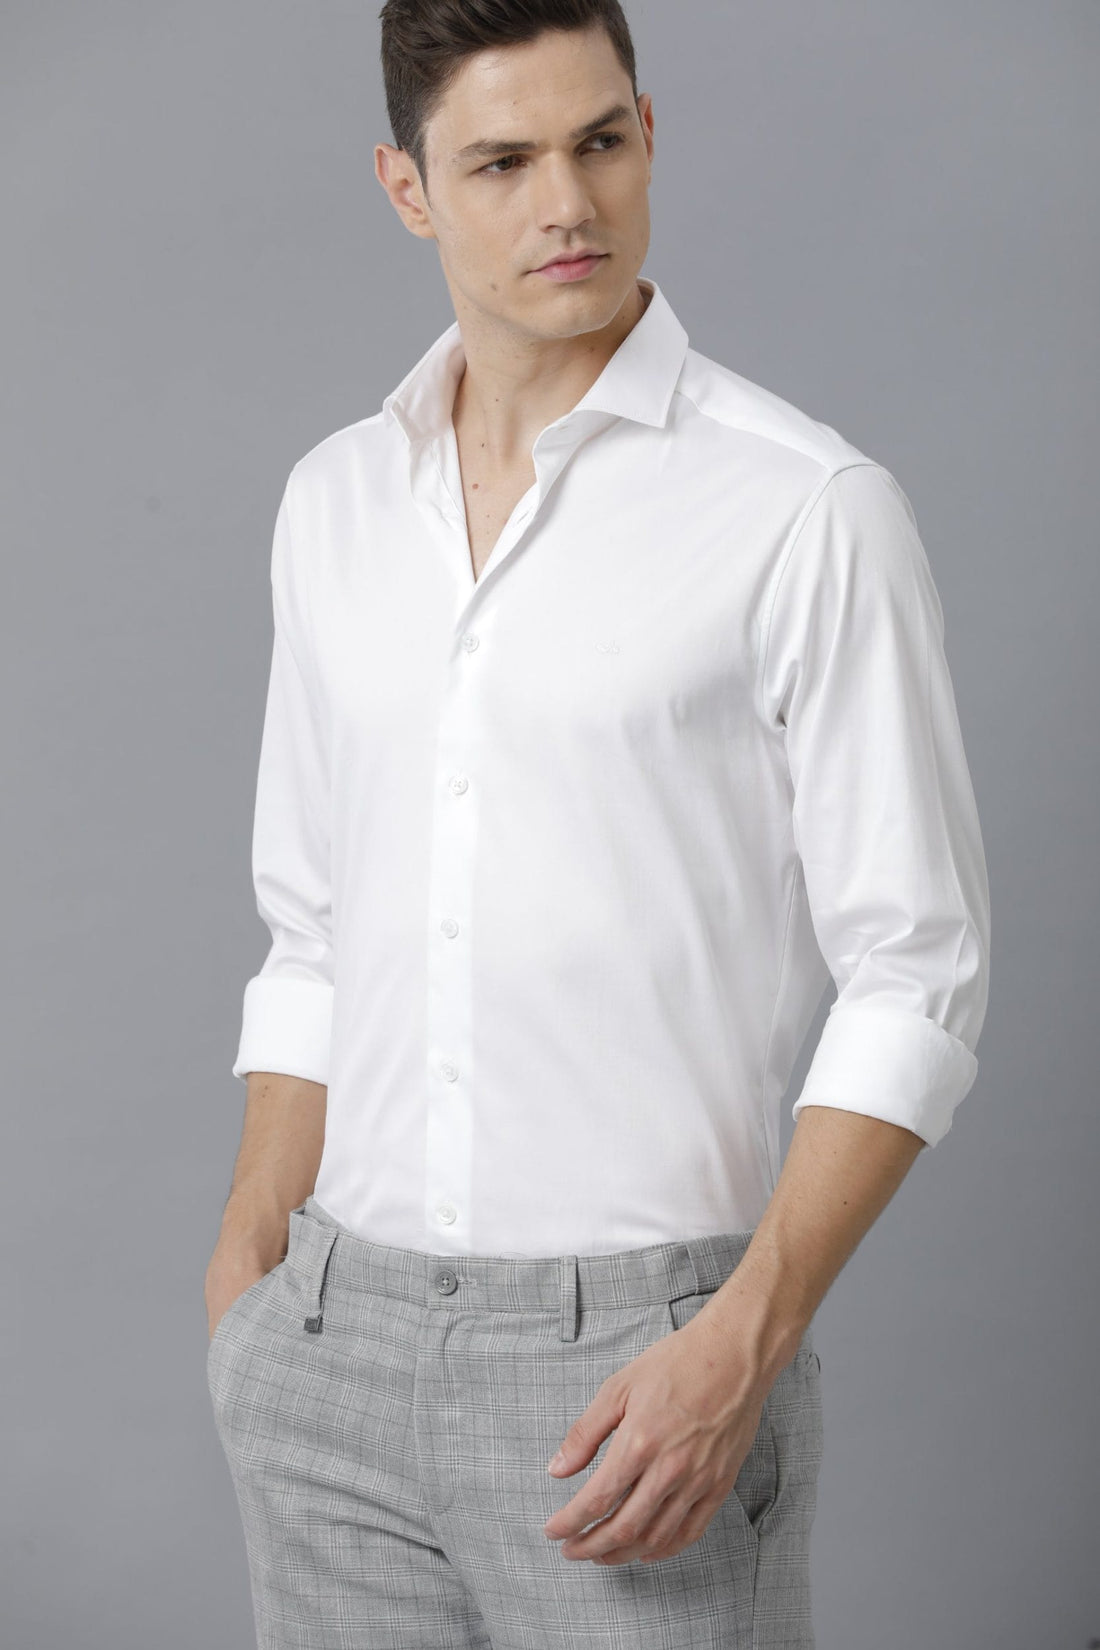 Solid Linen Formal Spread Collar White Shirt